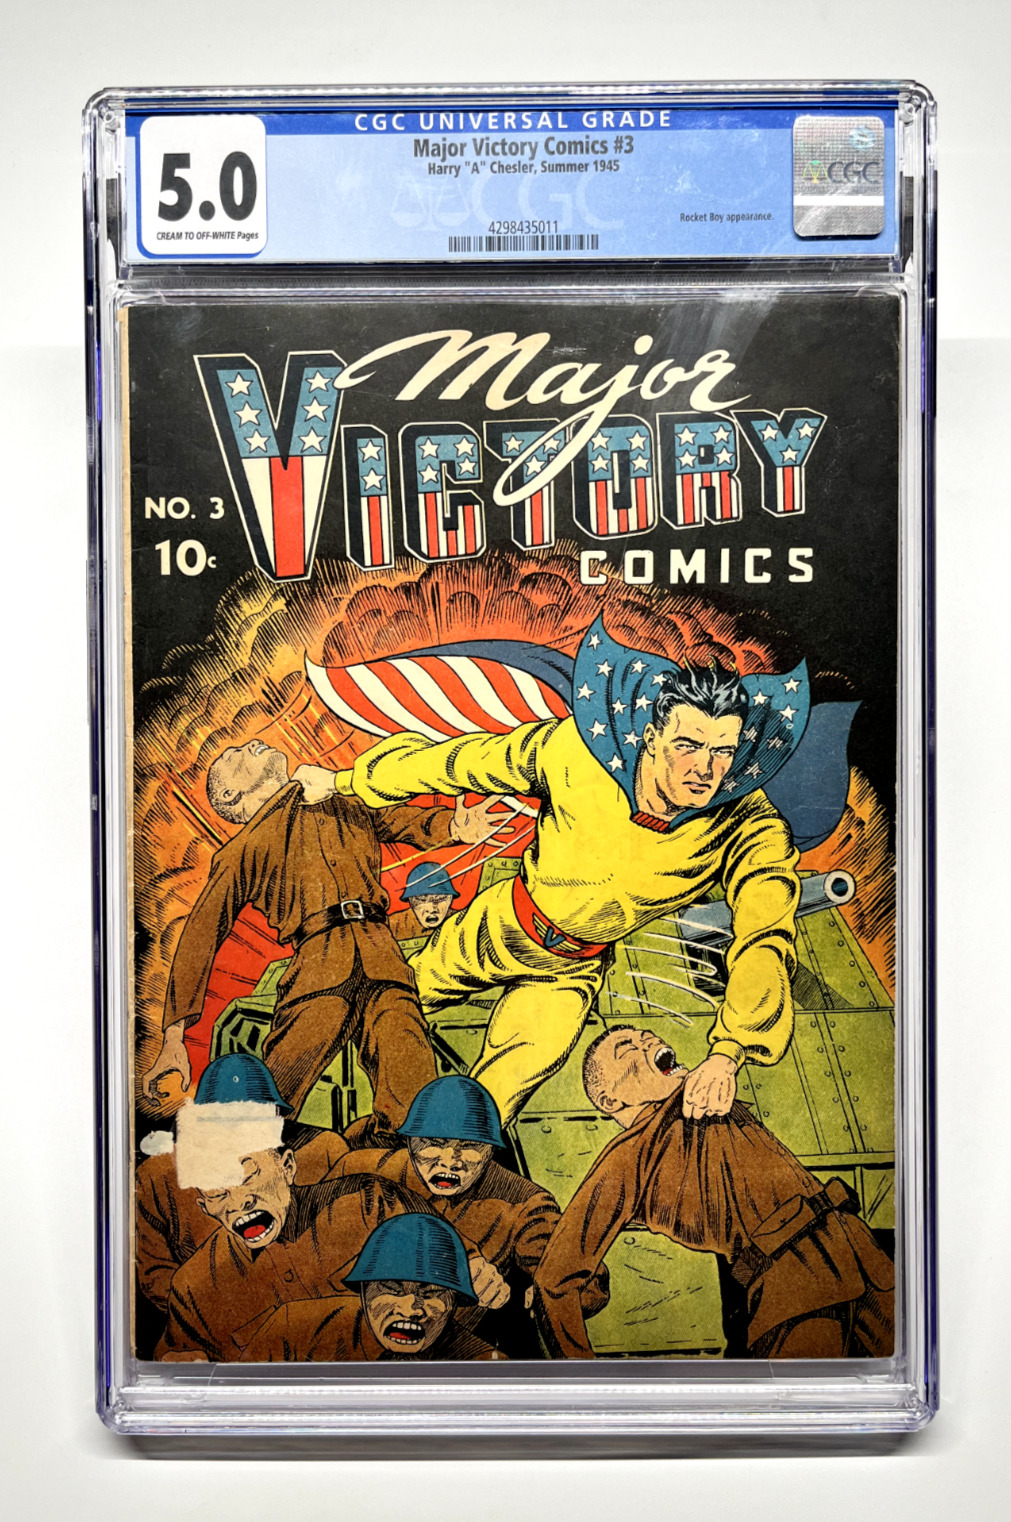 Major Victory Comics #3 CGC 5.0 (1945 Harry Chelser) Rare Last Issue of Title